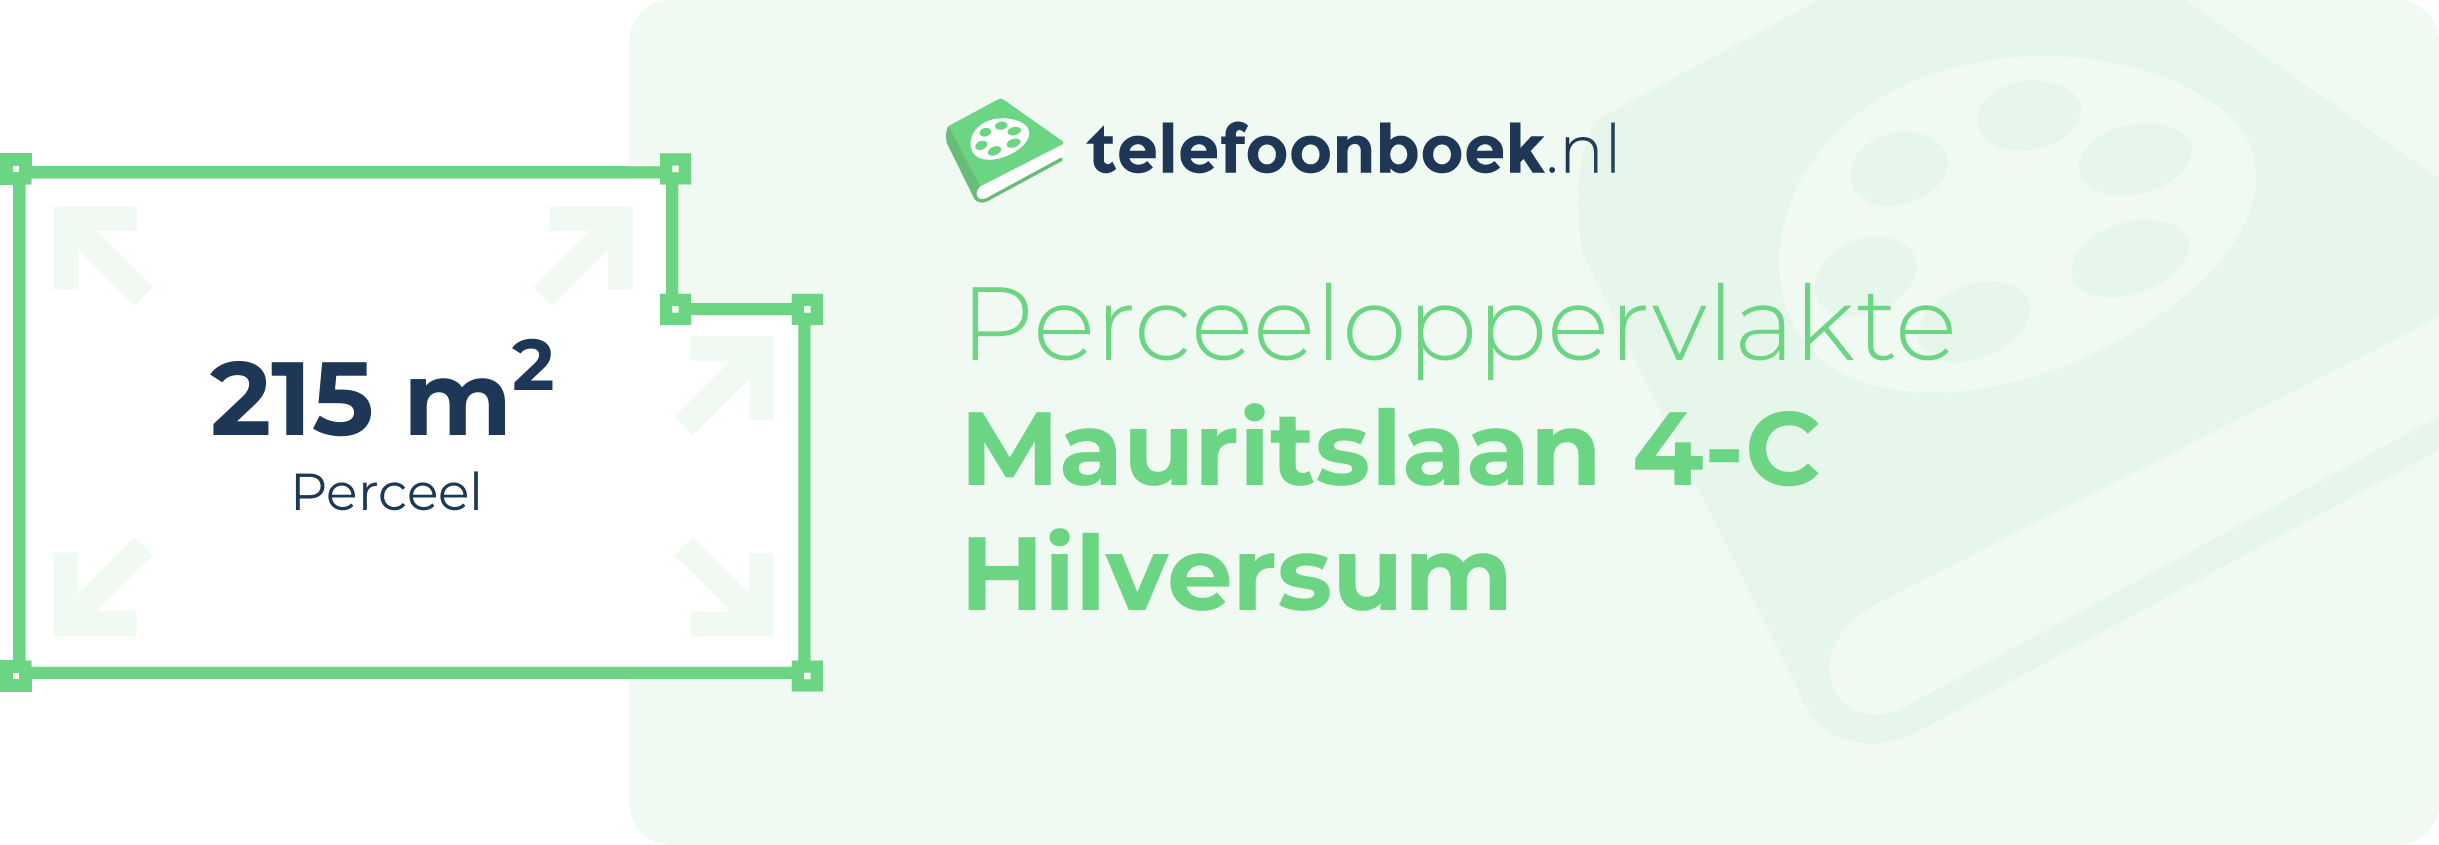 Perceeloppervlakte Mauritslaan 4-C Hilversum